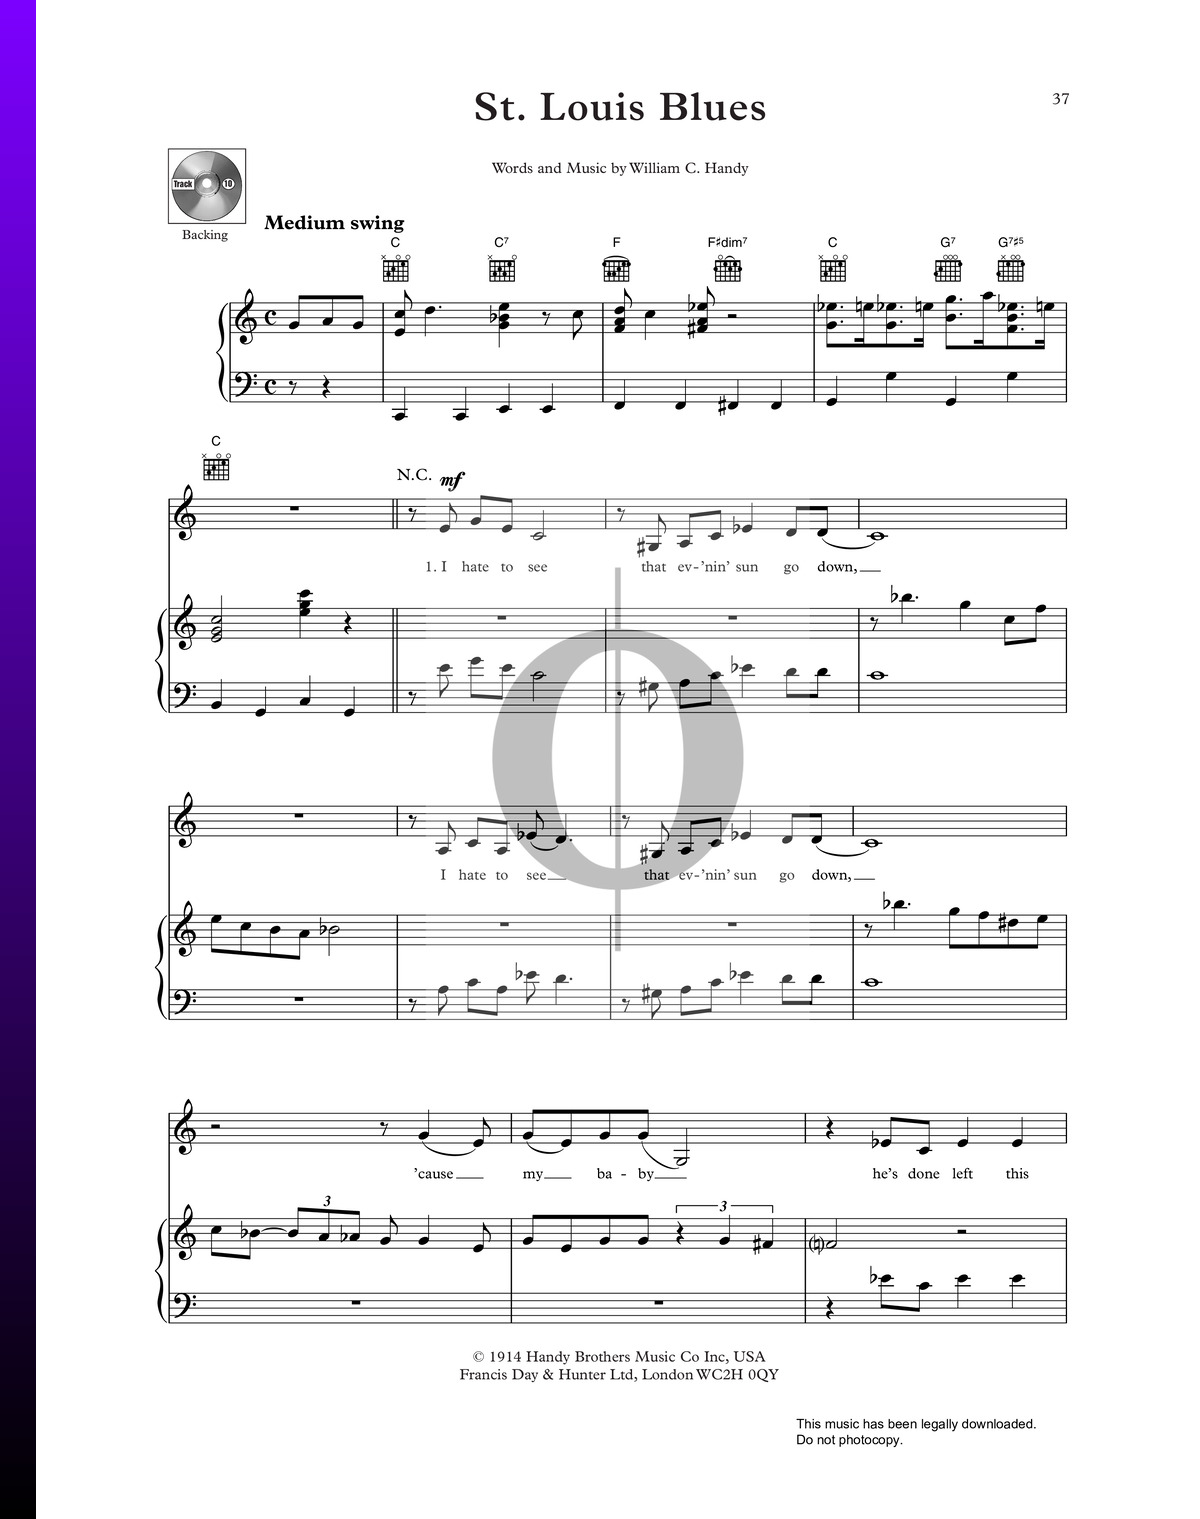 St. Louis Blues (Billie Holiday) Piano Sheet Music - OKTAV